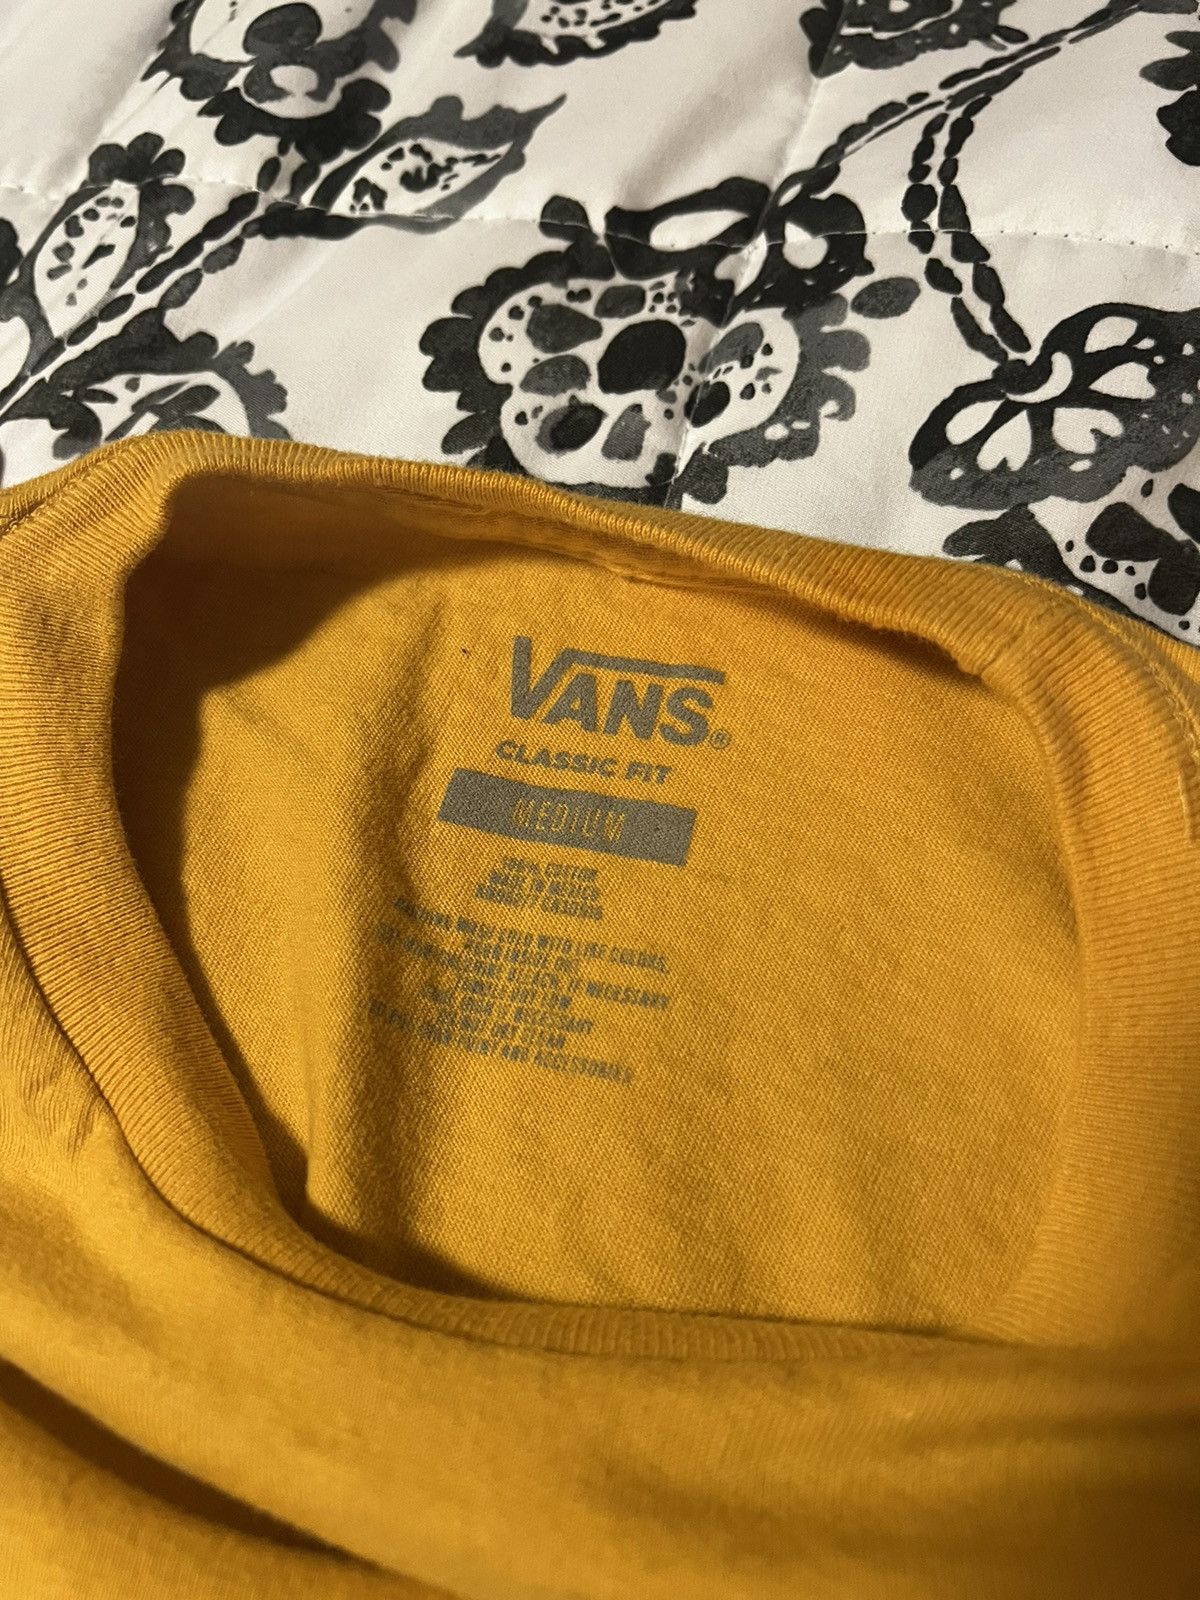 Vans Vans Bonsai Yellow Shirt Size US M / EU 48-50 / 2 - 4 Preview